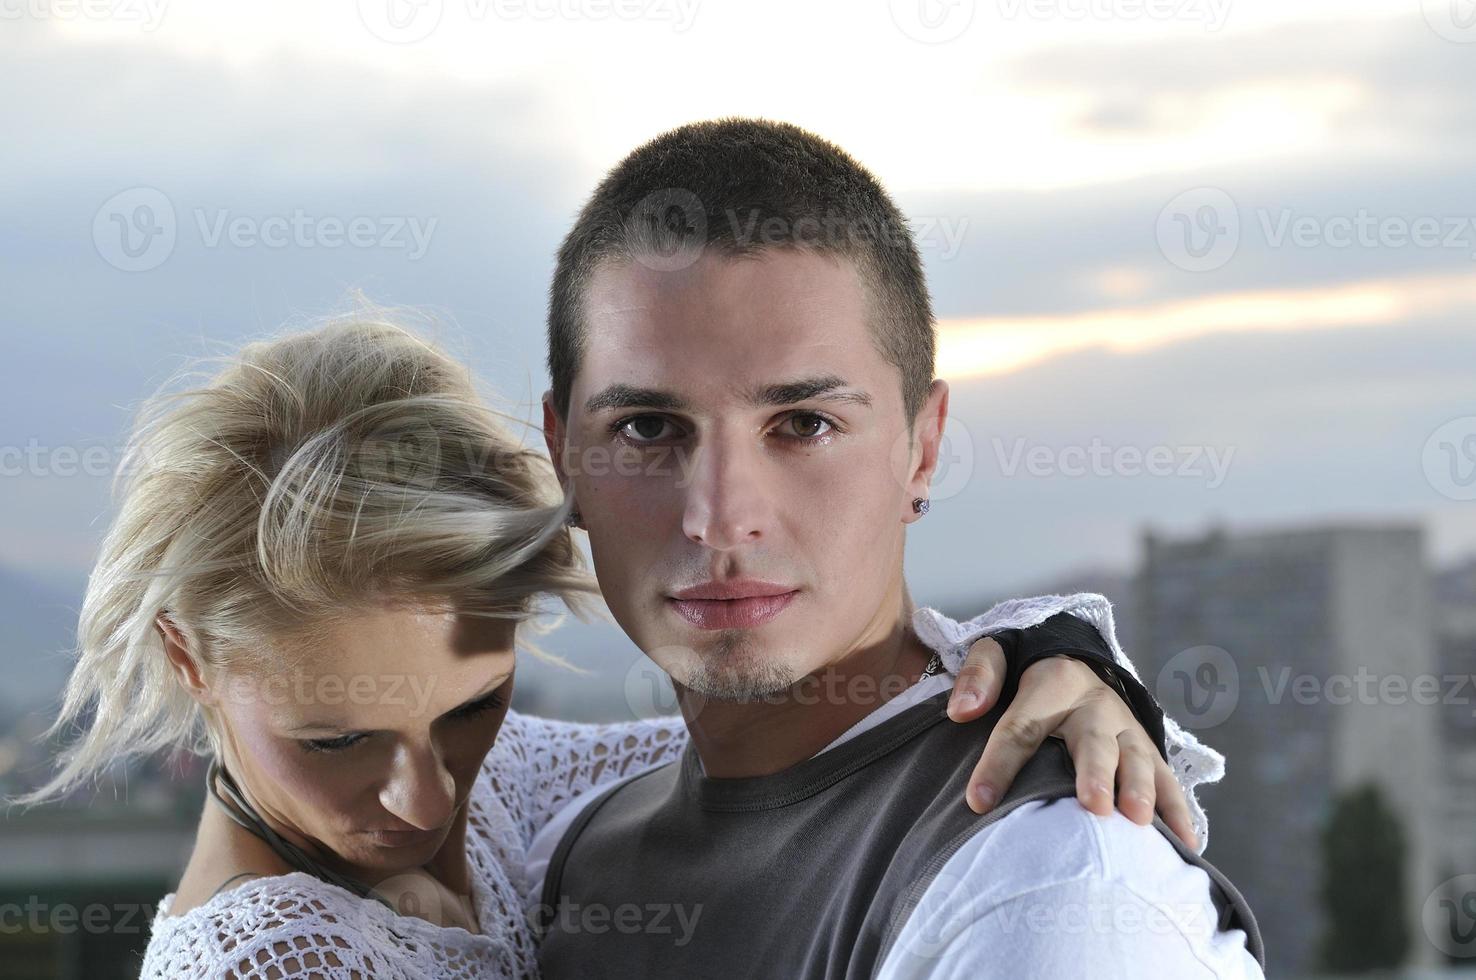 romântico casal jovem urbano ao ar livre foto